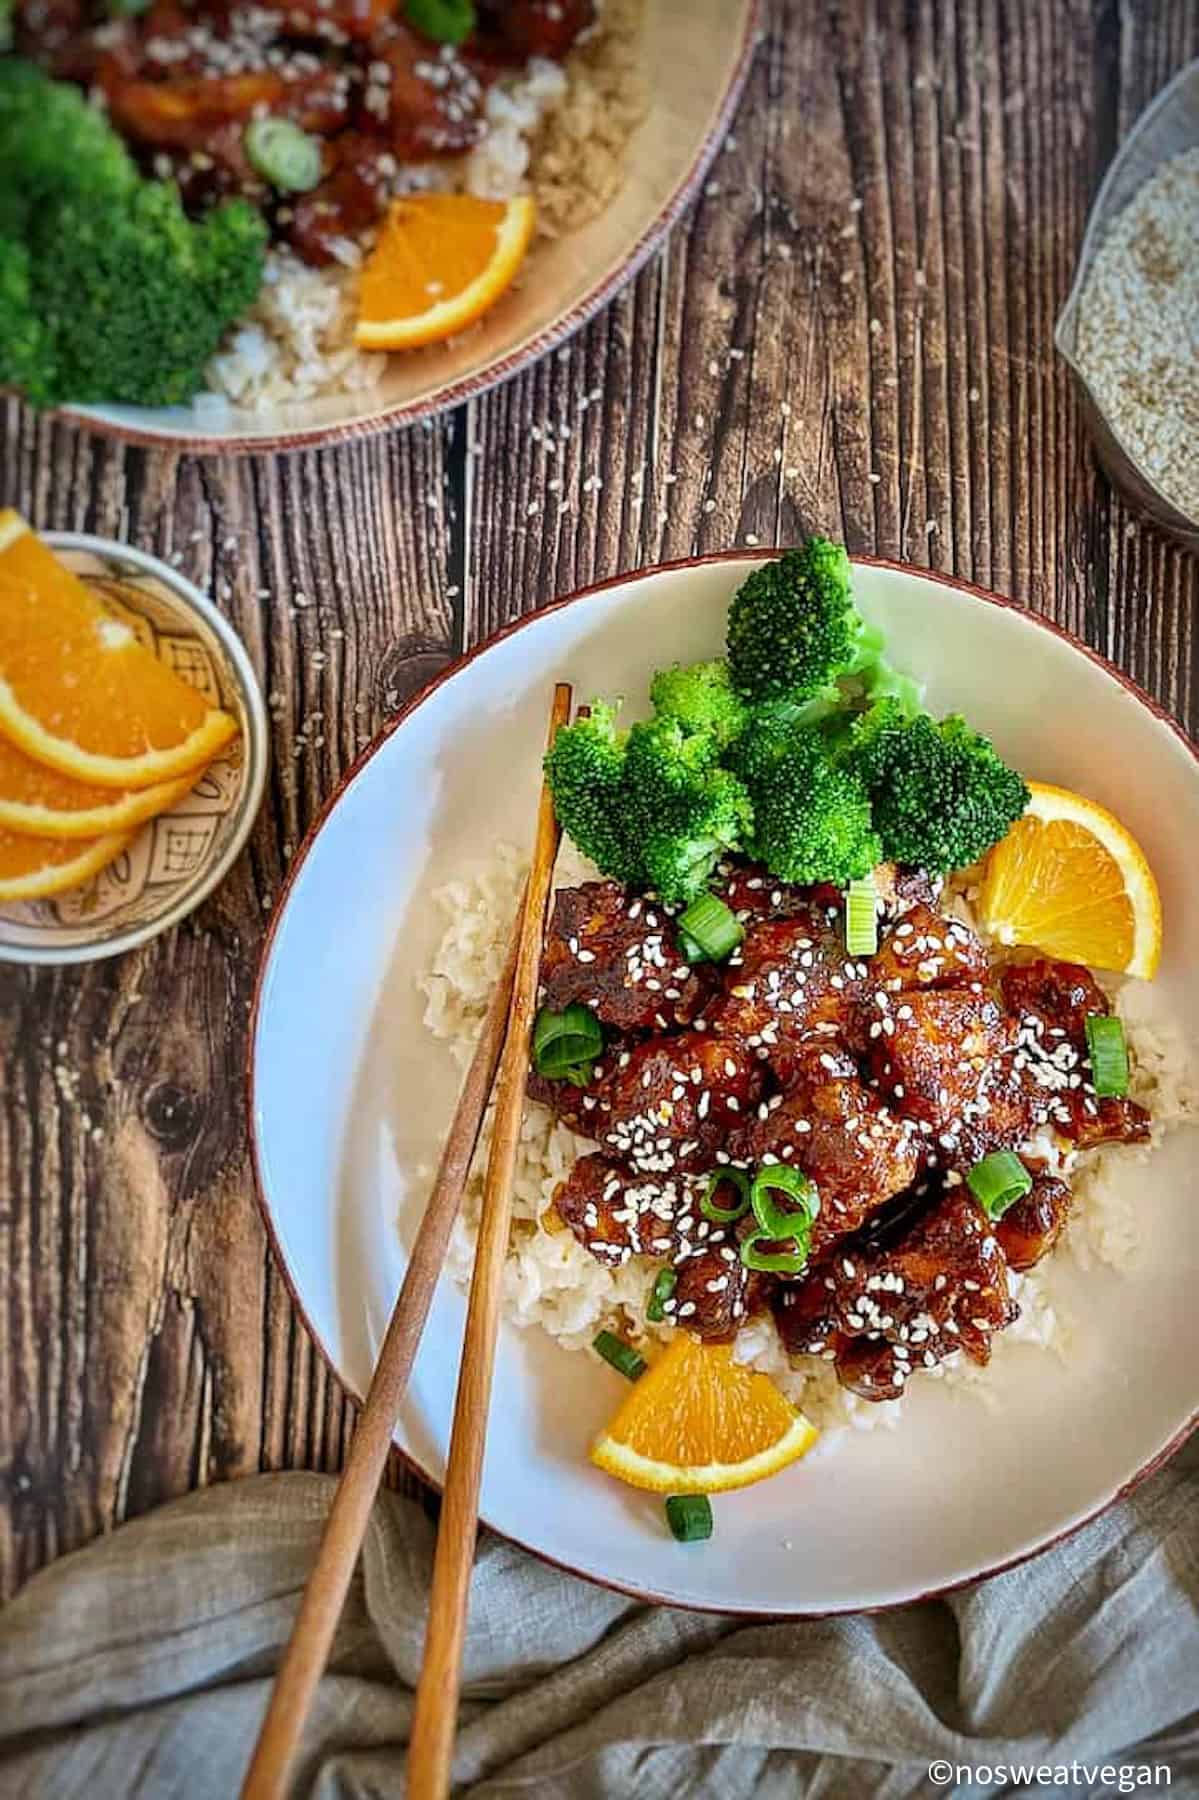 Orange tofu and broccoli in a bowl.